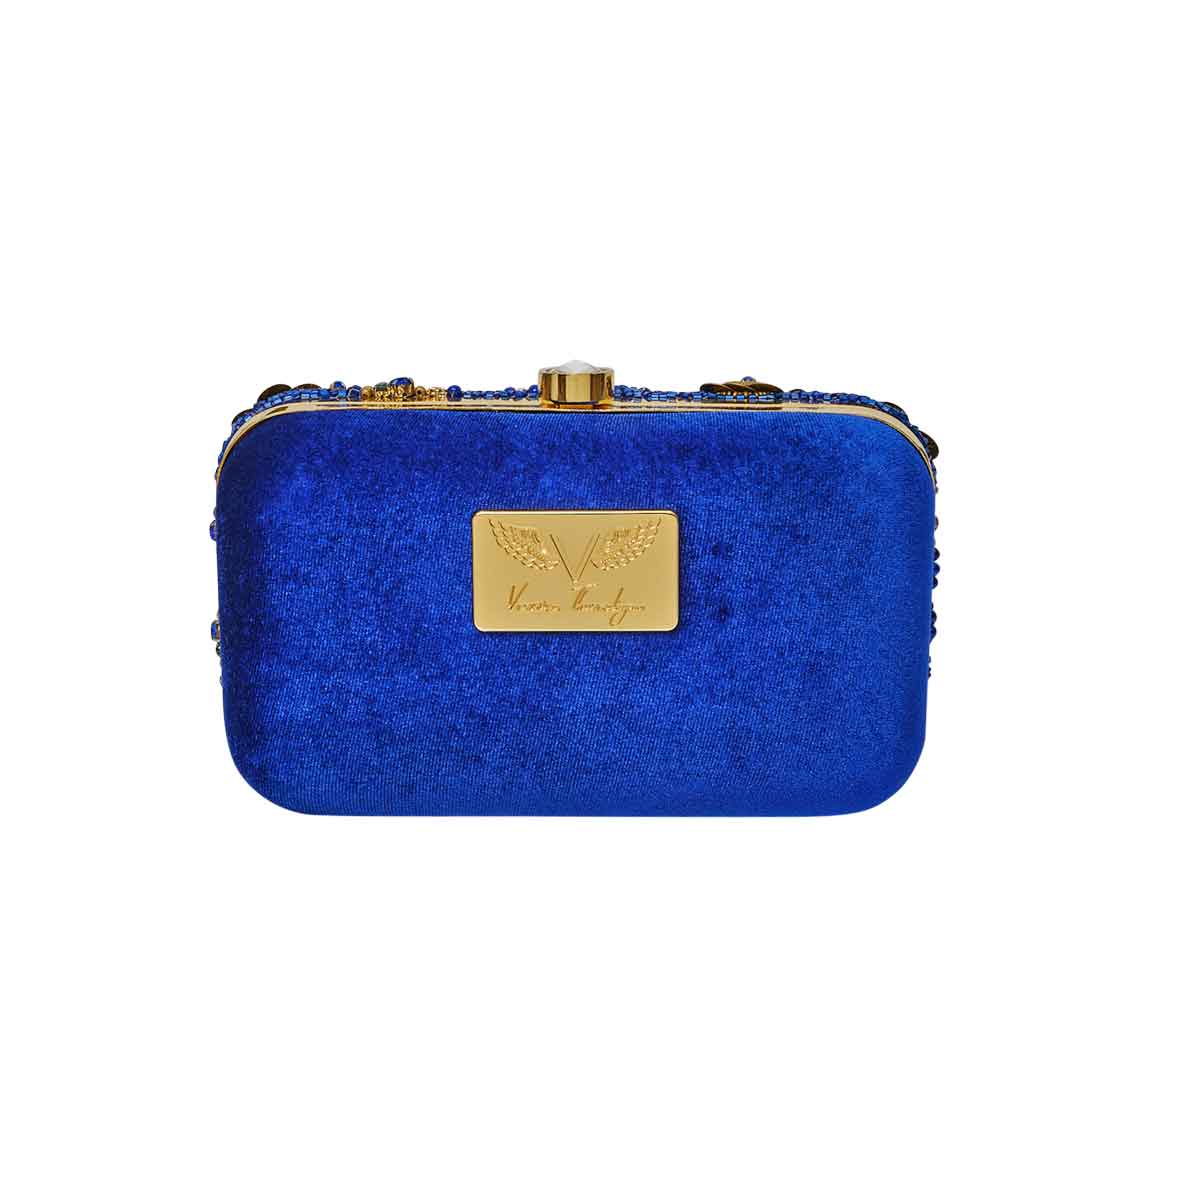 Aelia, Our Iconic Clutch Bag (Royal Blue), Hard-Case Clutch Purse